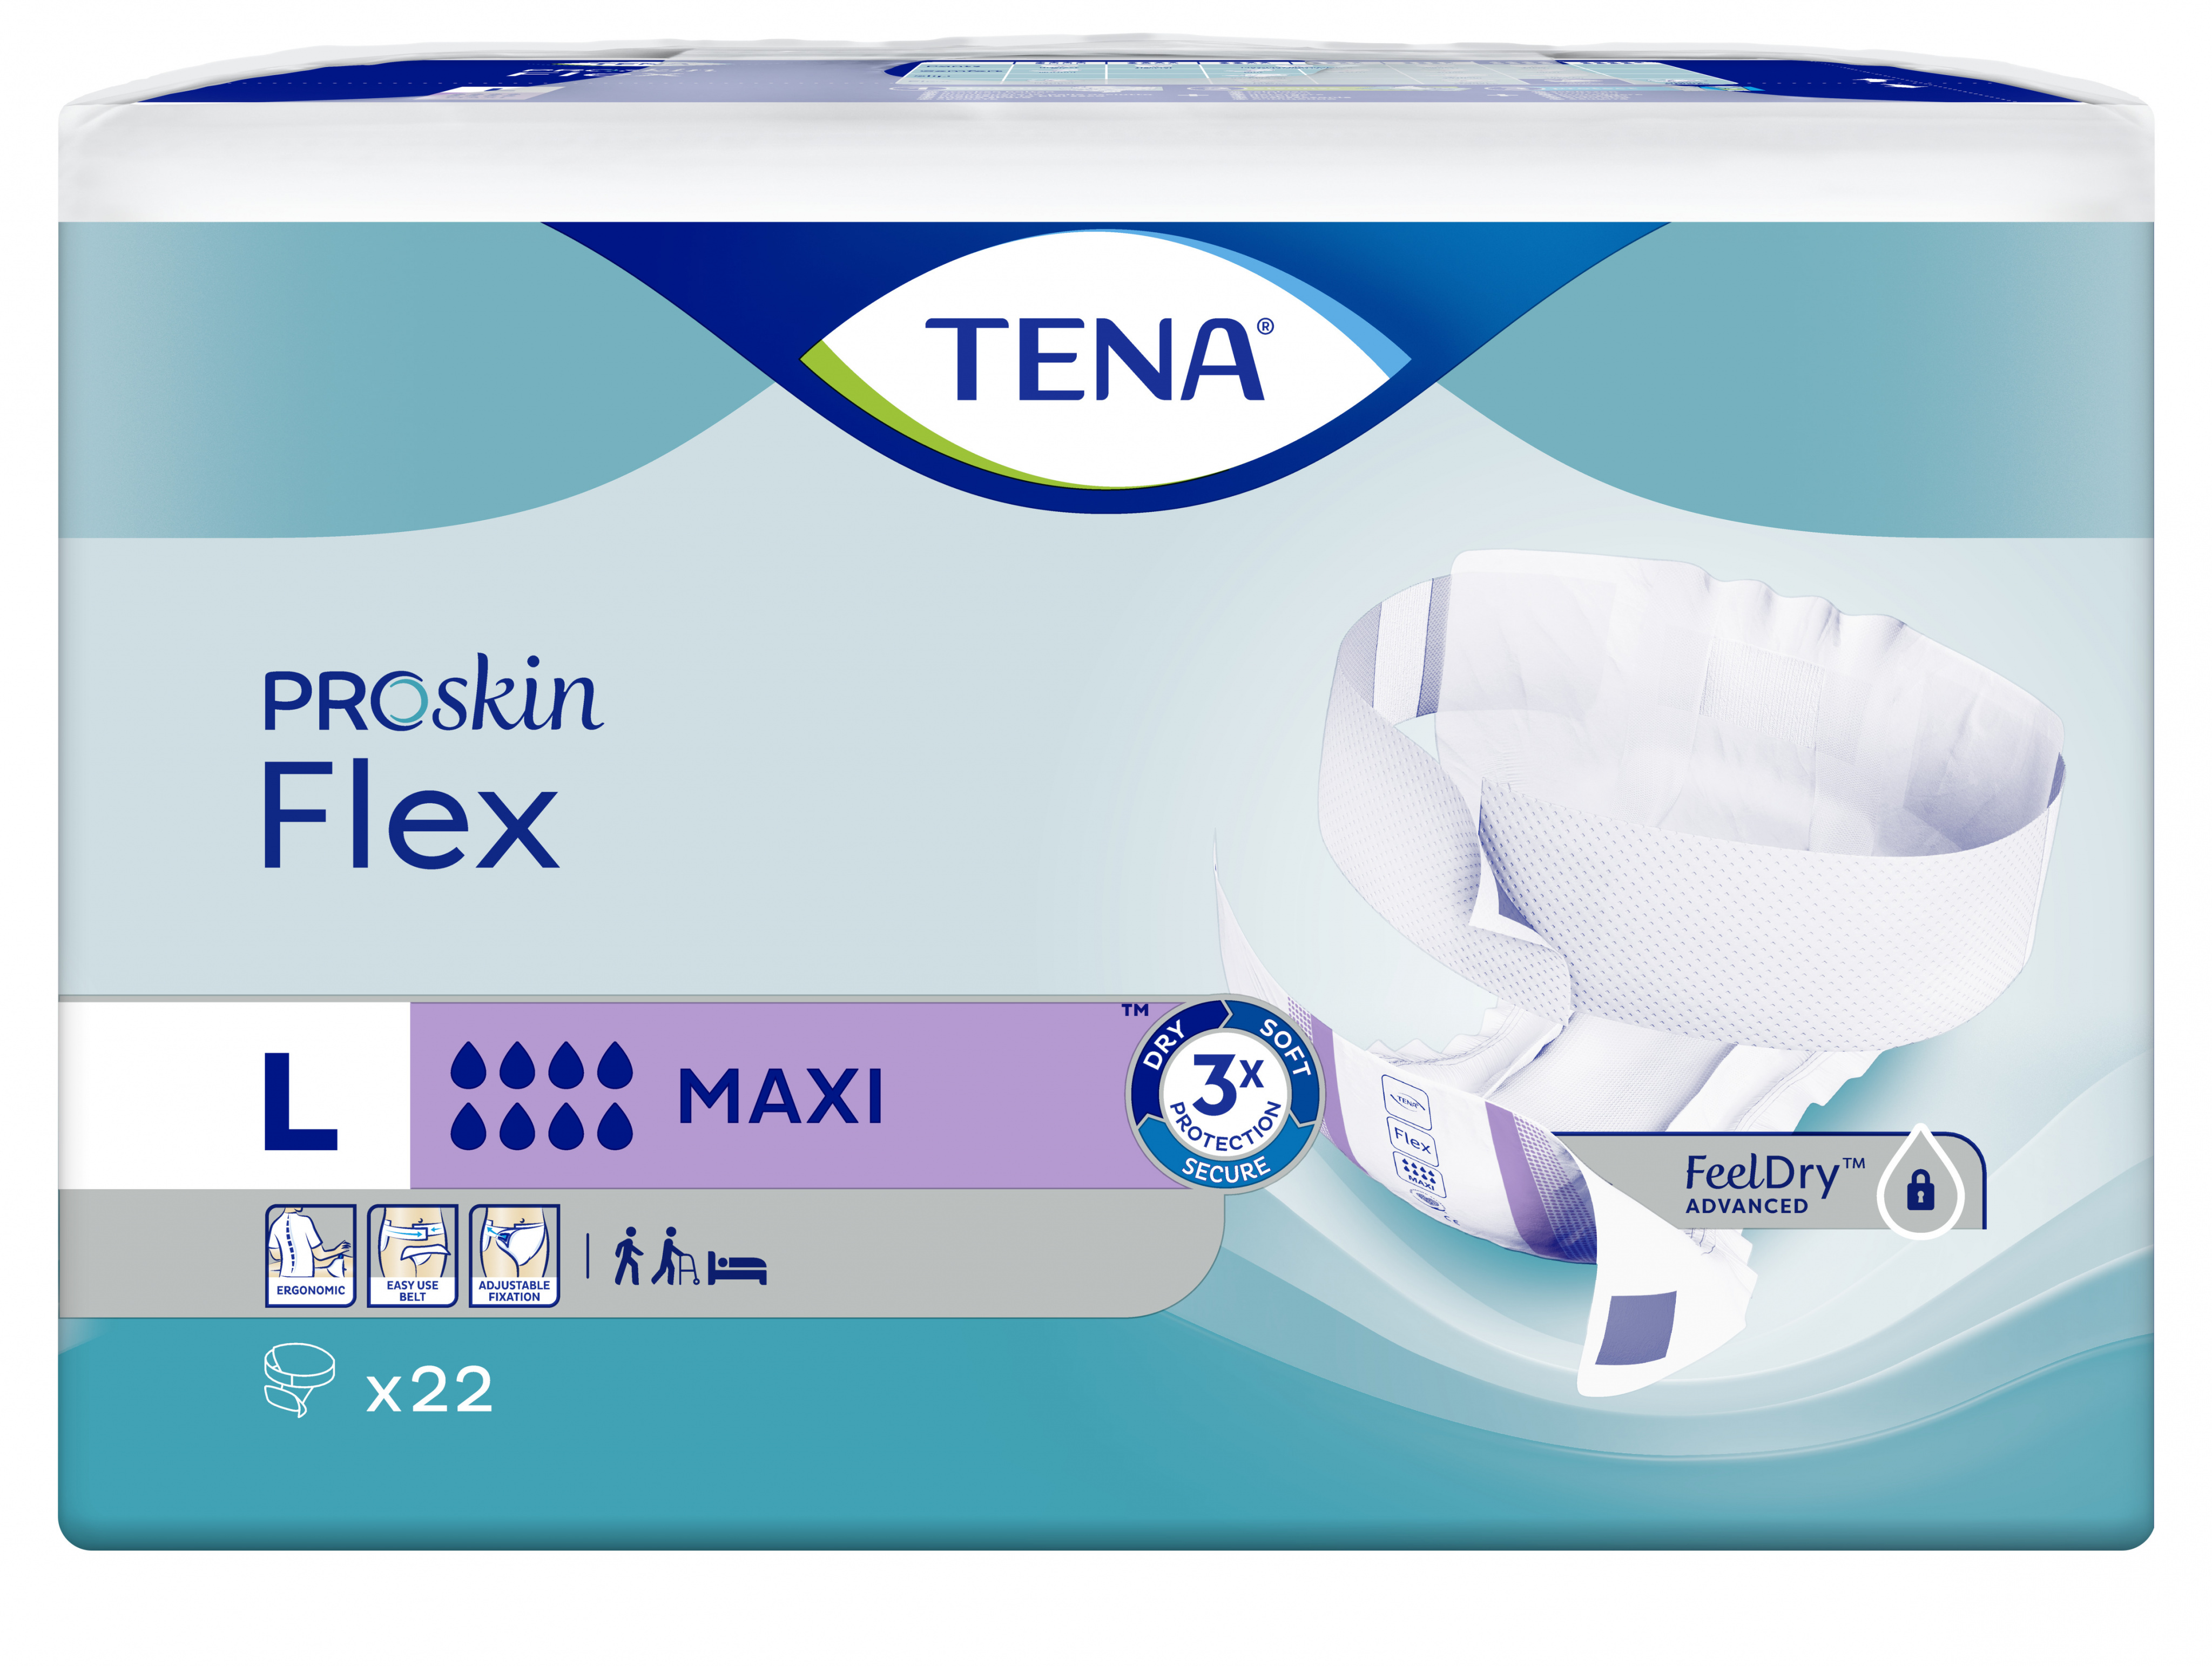 TENA PROskin Flex Maxi Large 22s image 0